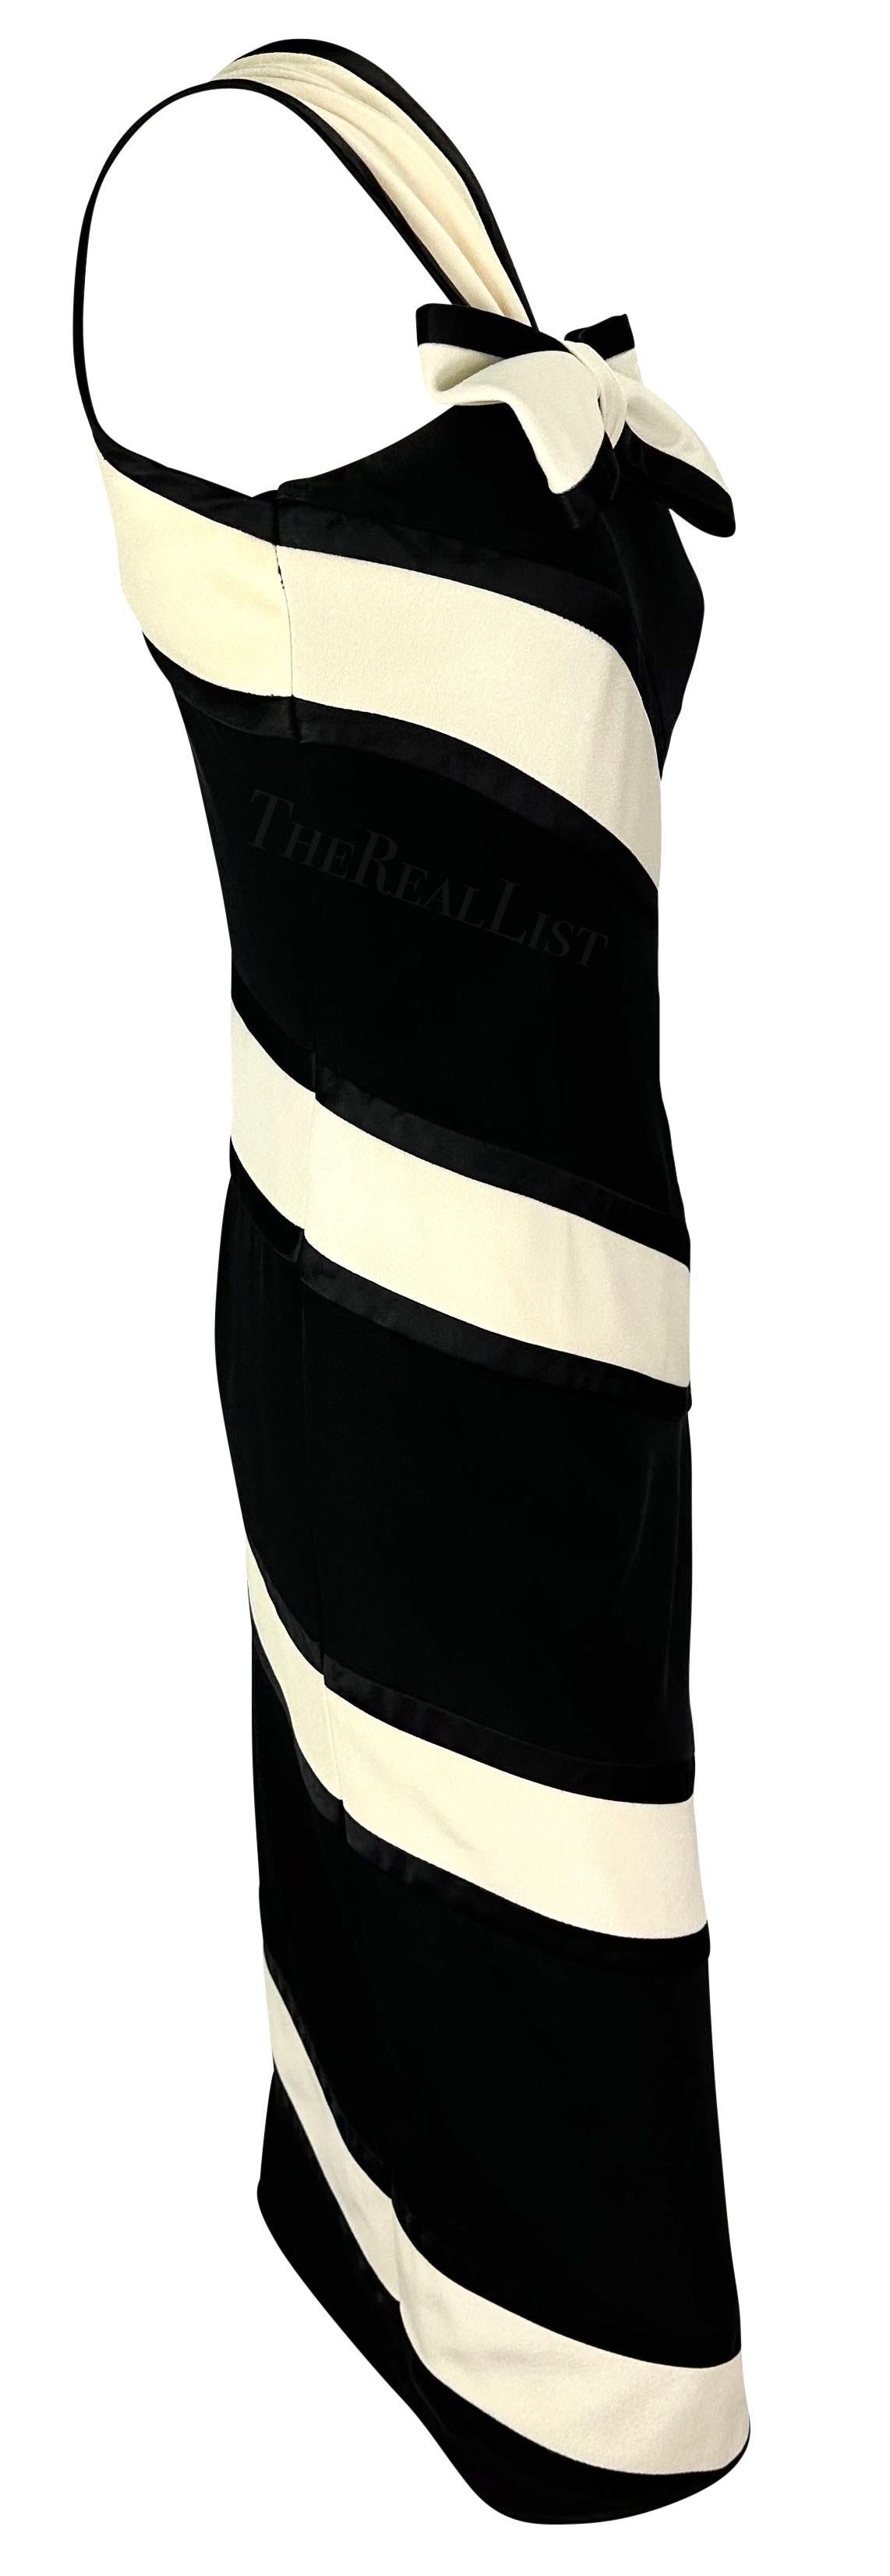 S/S 1993 Valentino Garavani Runway Black White Stripe Bow Dress For Sale 2